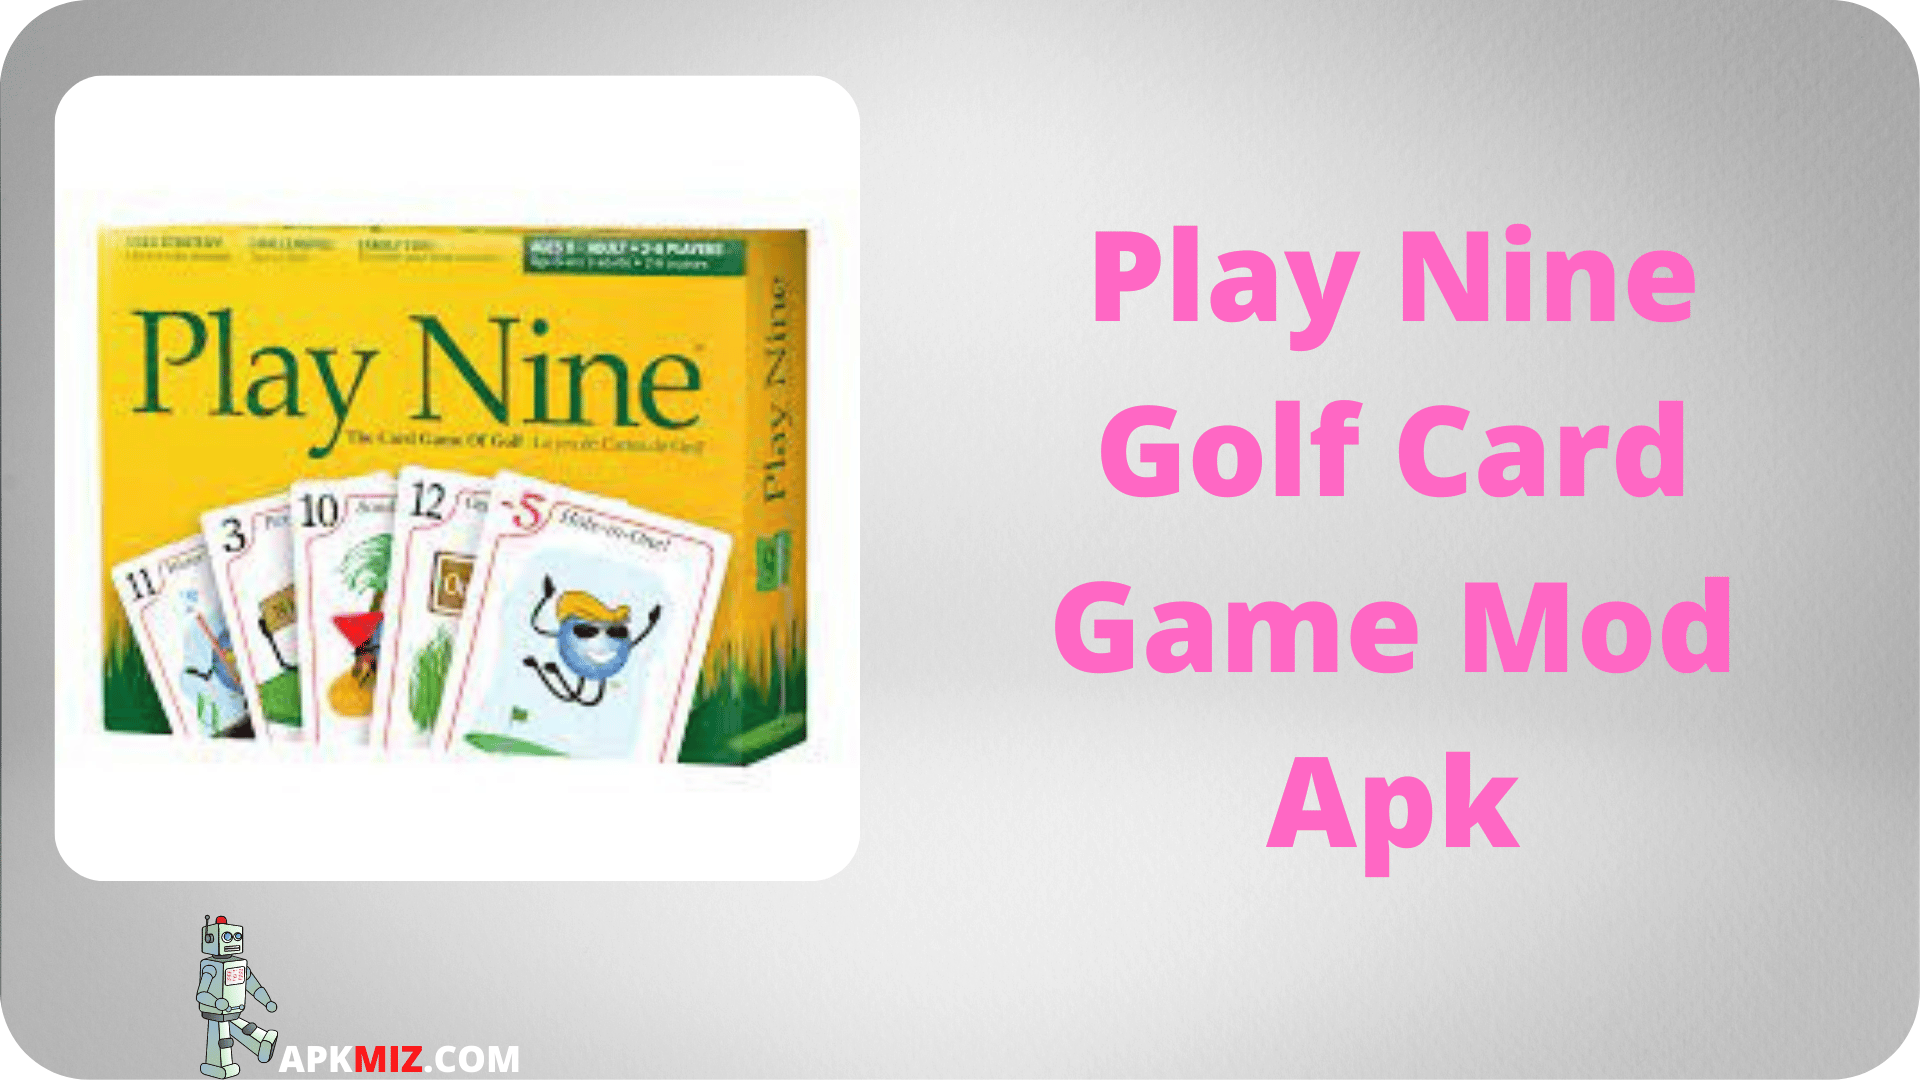 Play Nine Golf Card Game Mod Apk